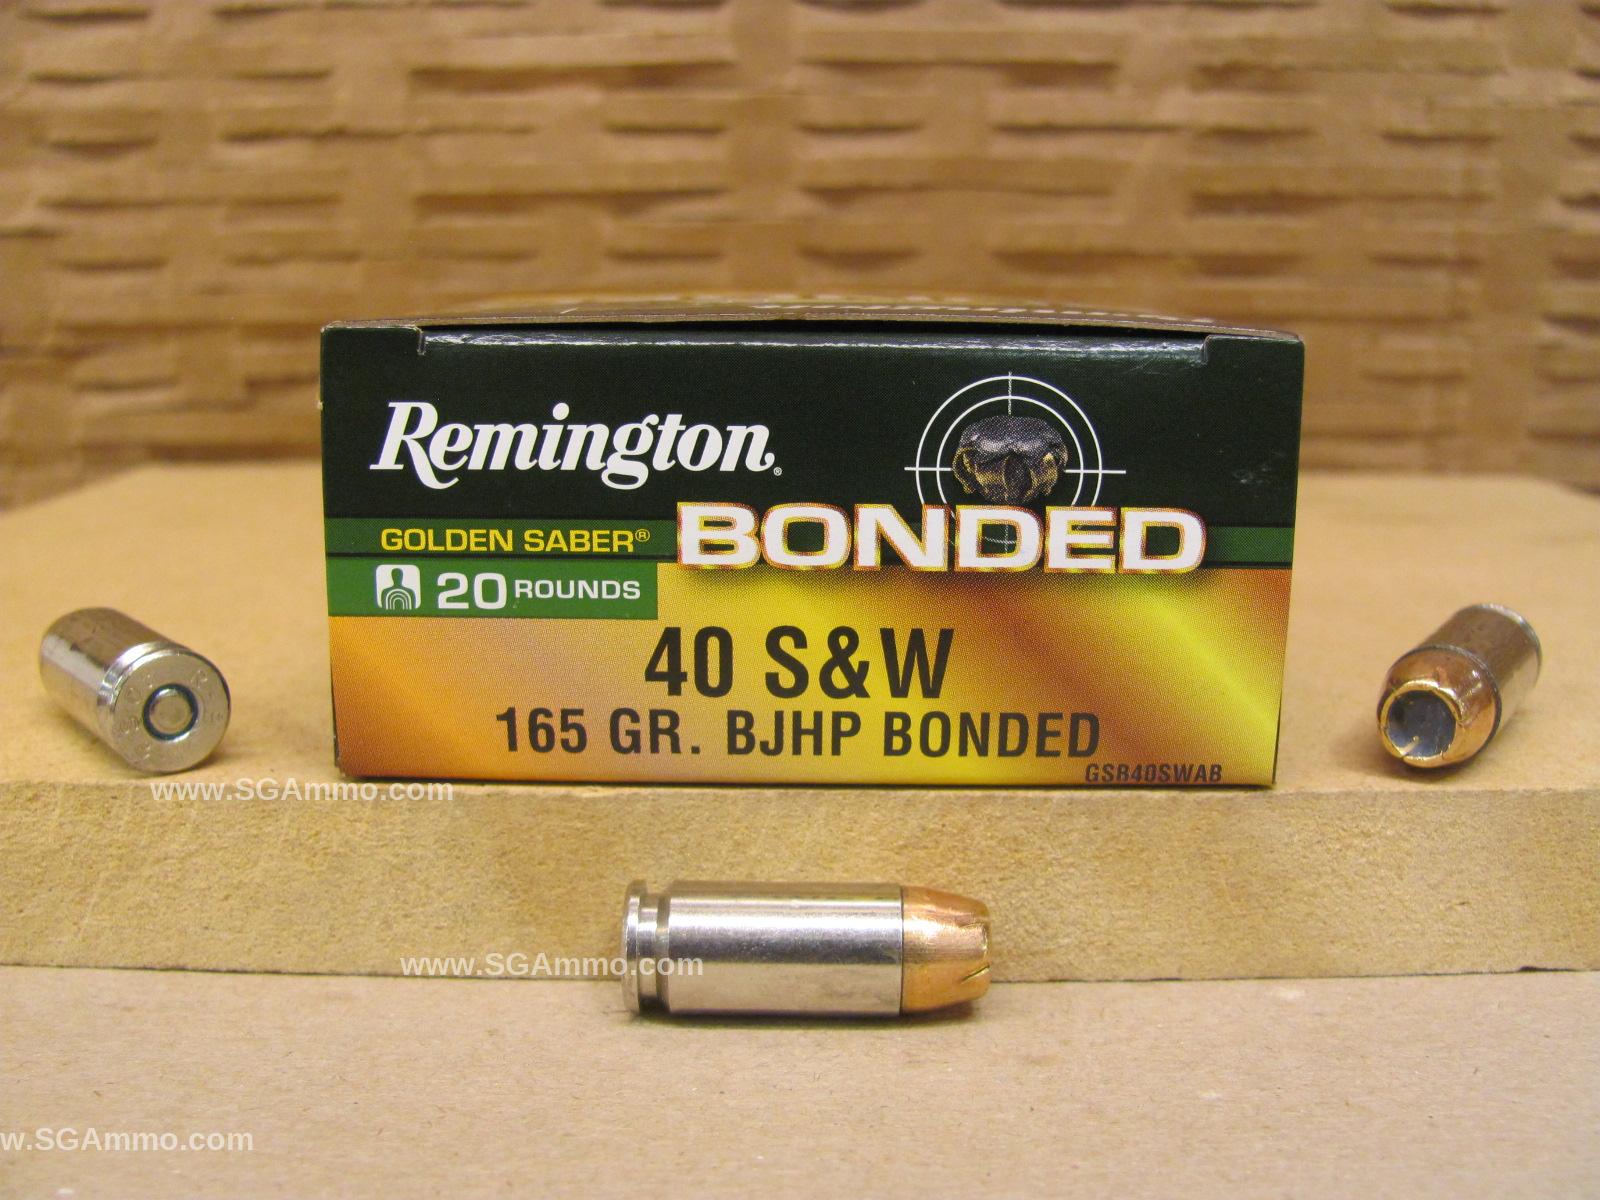 20 Round Box - 40 SW 165 Grain BJHP Bonded Hollow Point Remington Golden Saber Ammo - GSB40SWAB